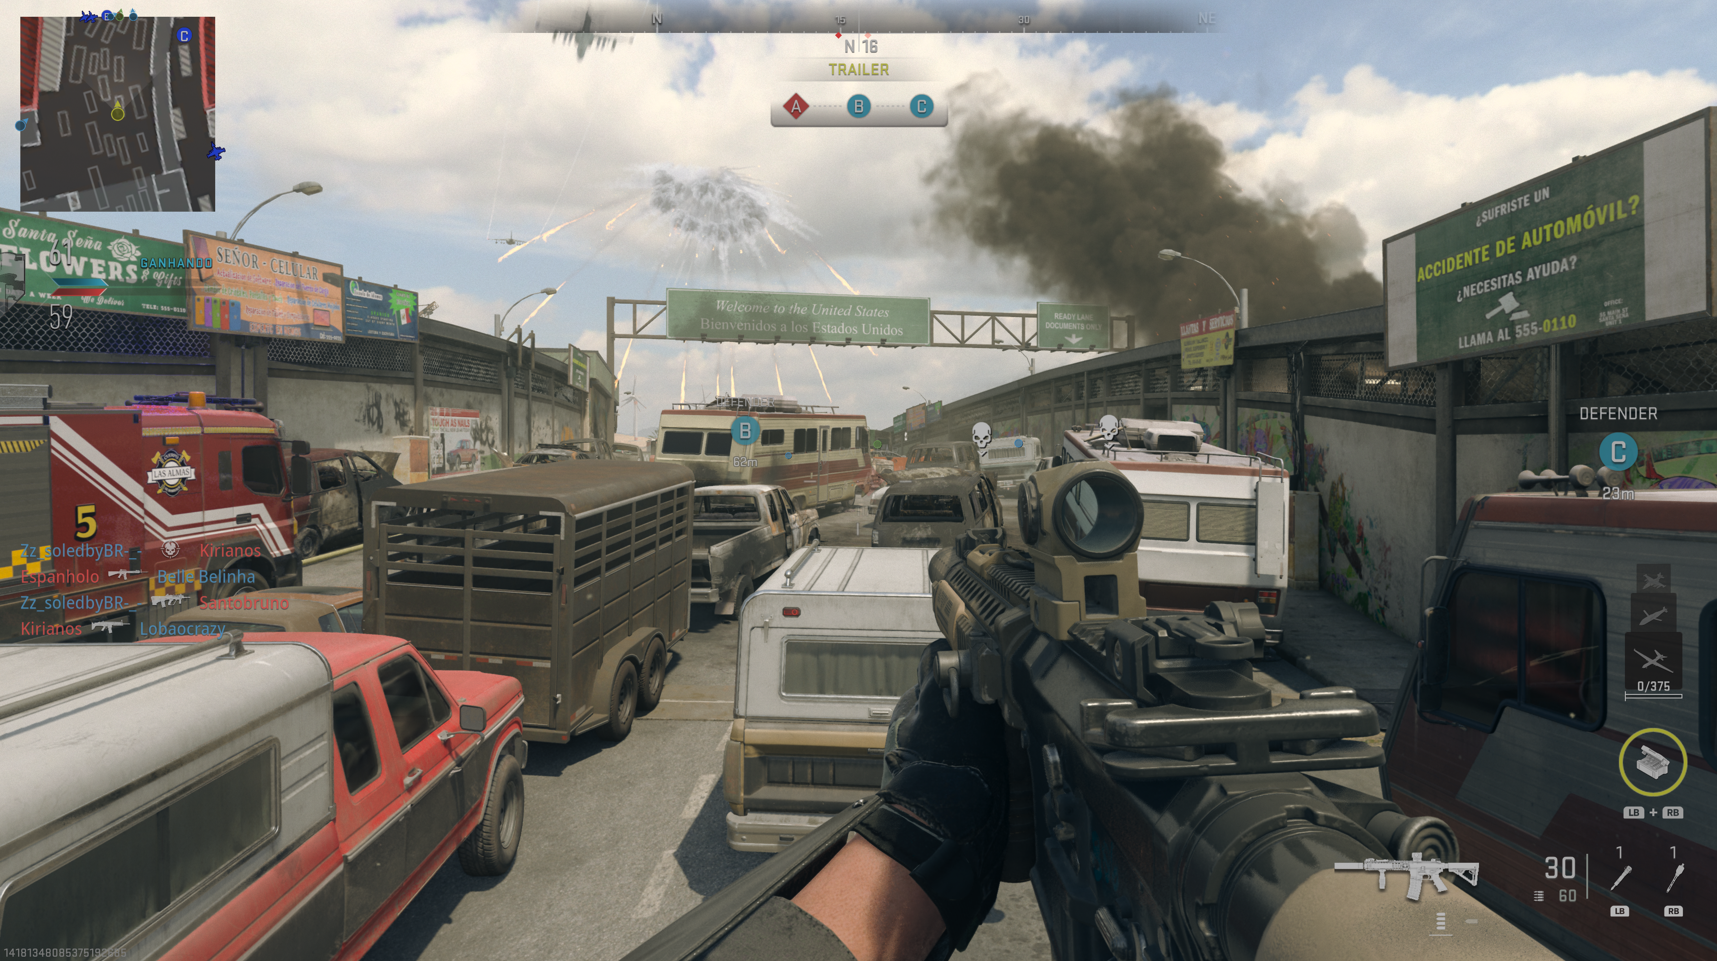 Call of Duty: Modern Warfare 2 ganha trailer; veja novidades da gameplay